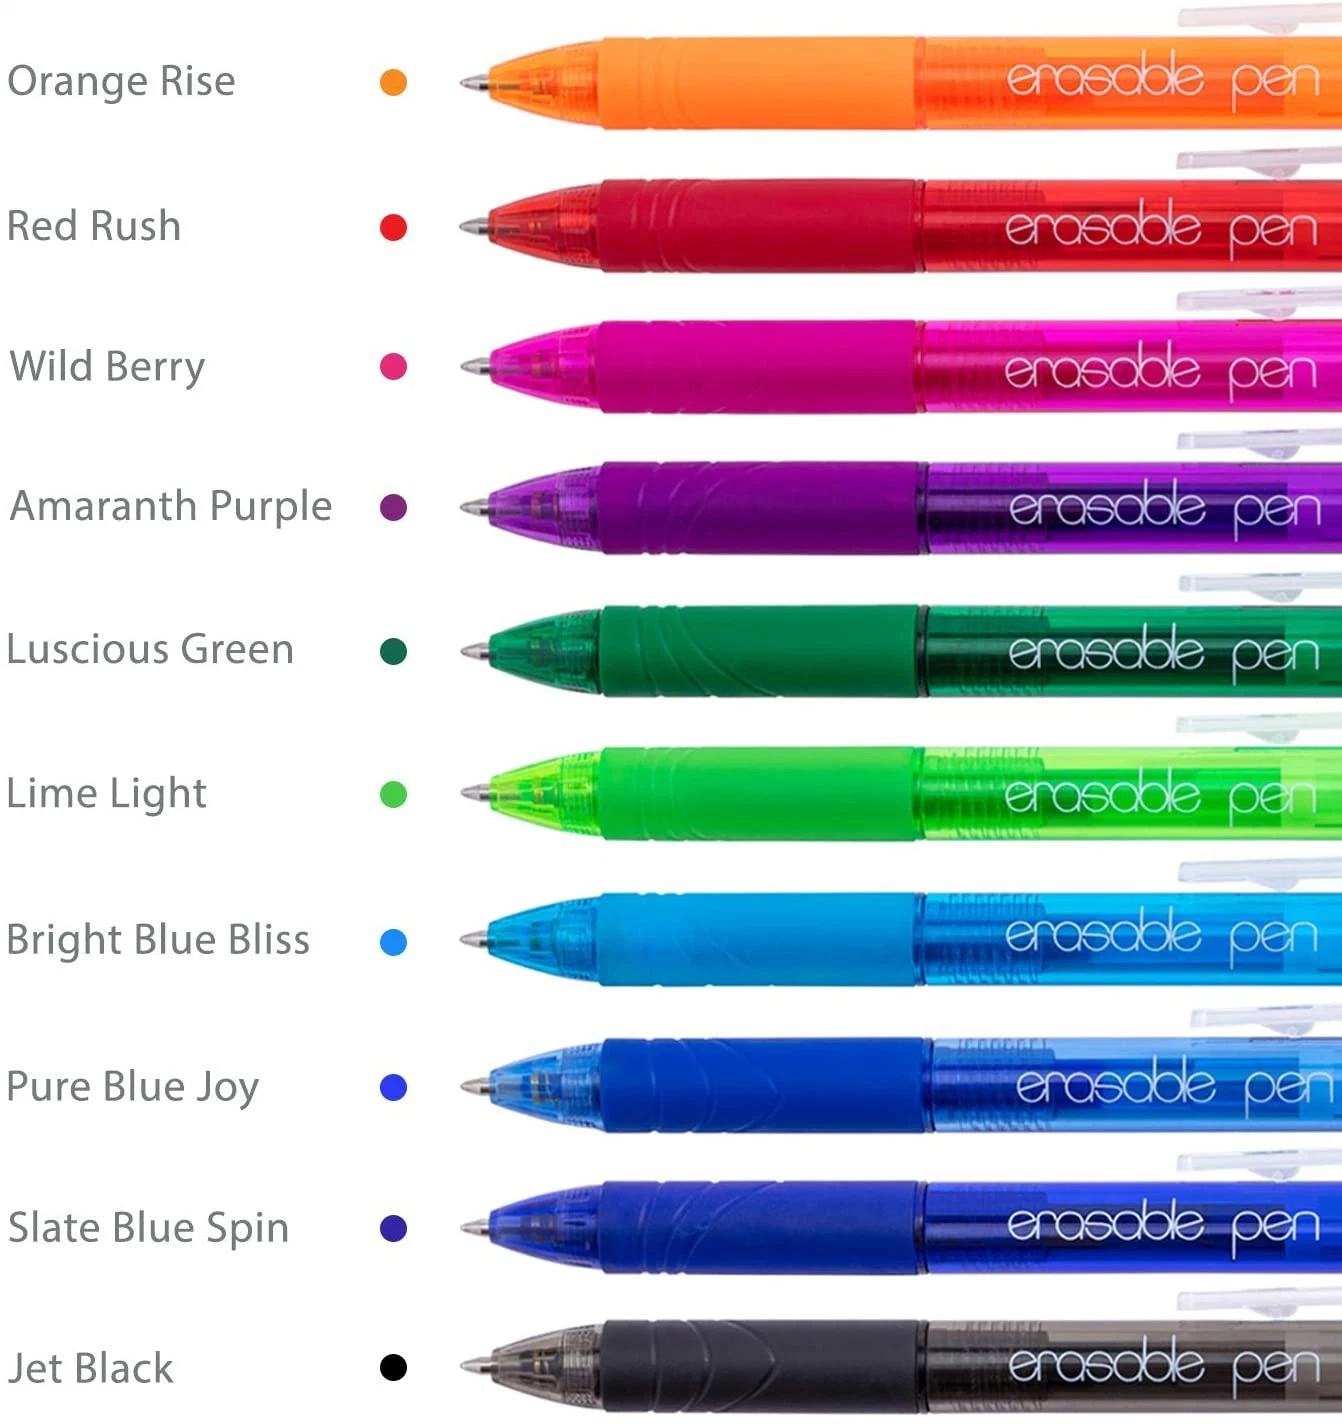 Push Action Erasable Gel Pen Multi-Color Erasable Bullet Tip Water Pen Office Stationery Press Type Thermal Erasable